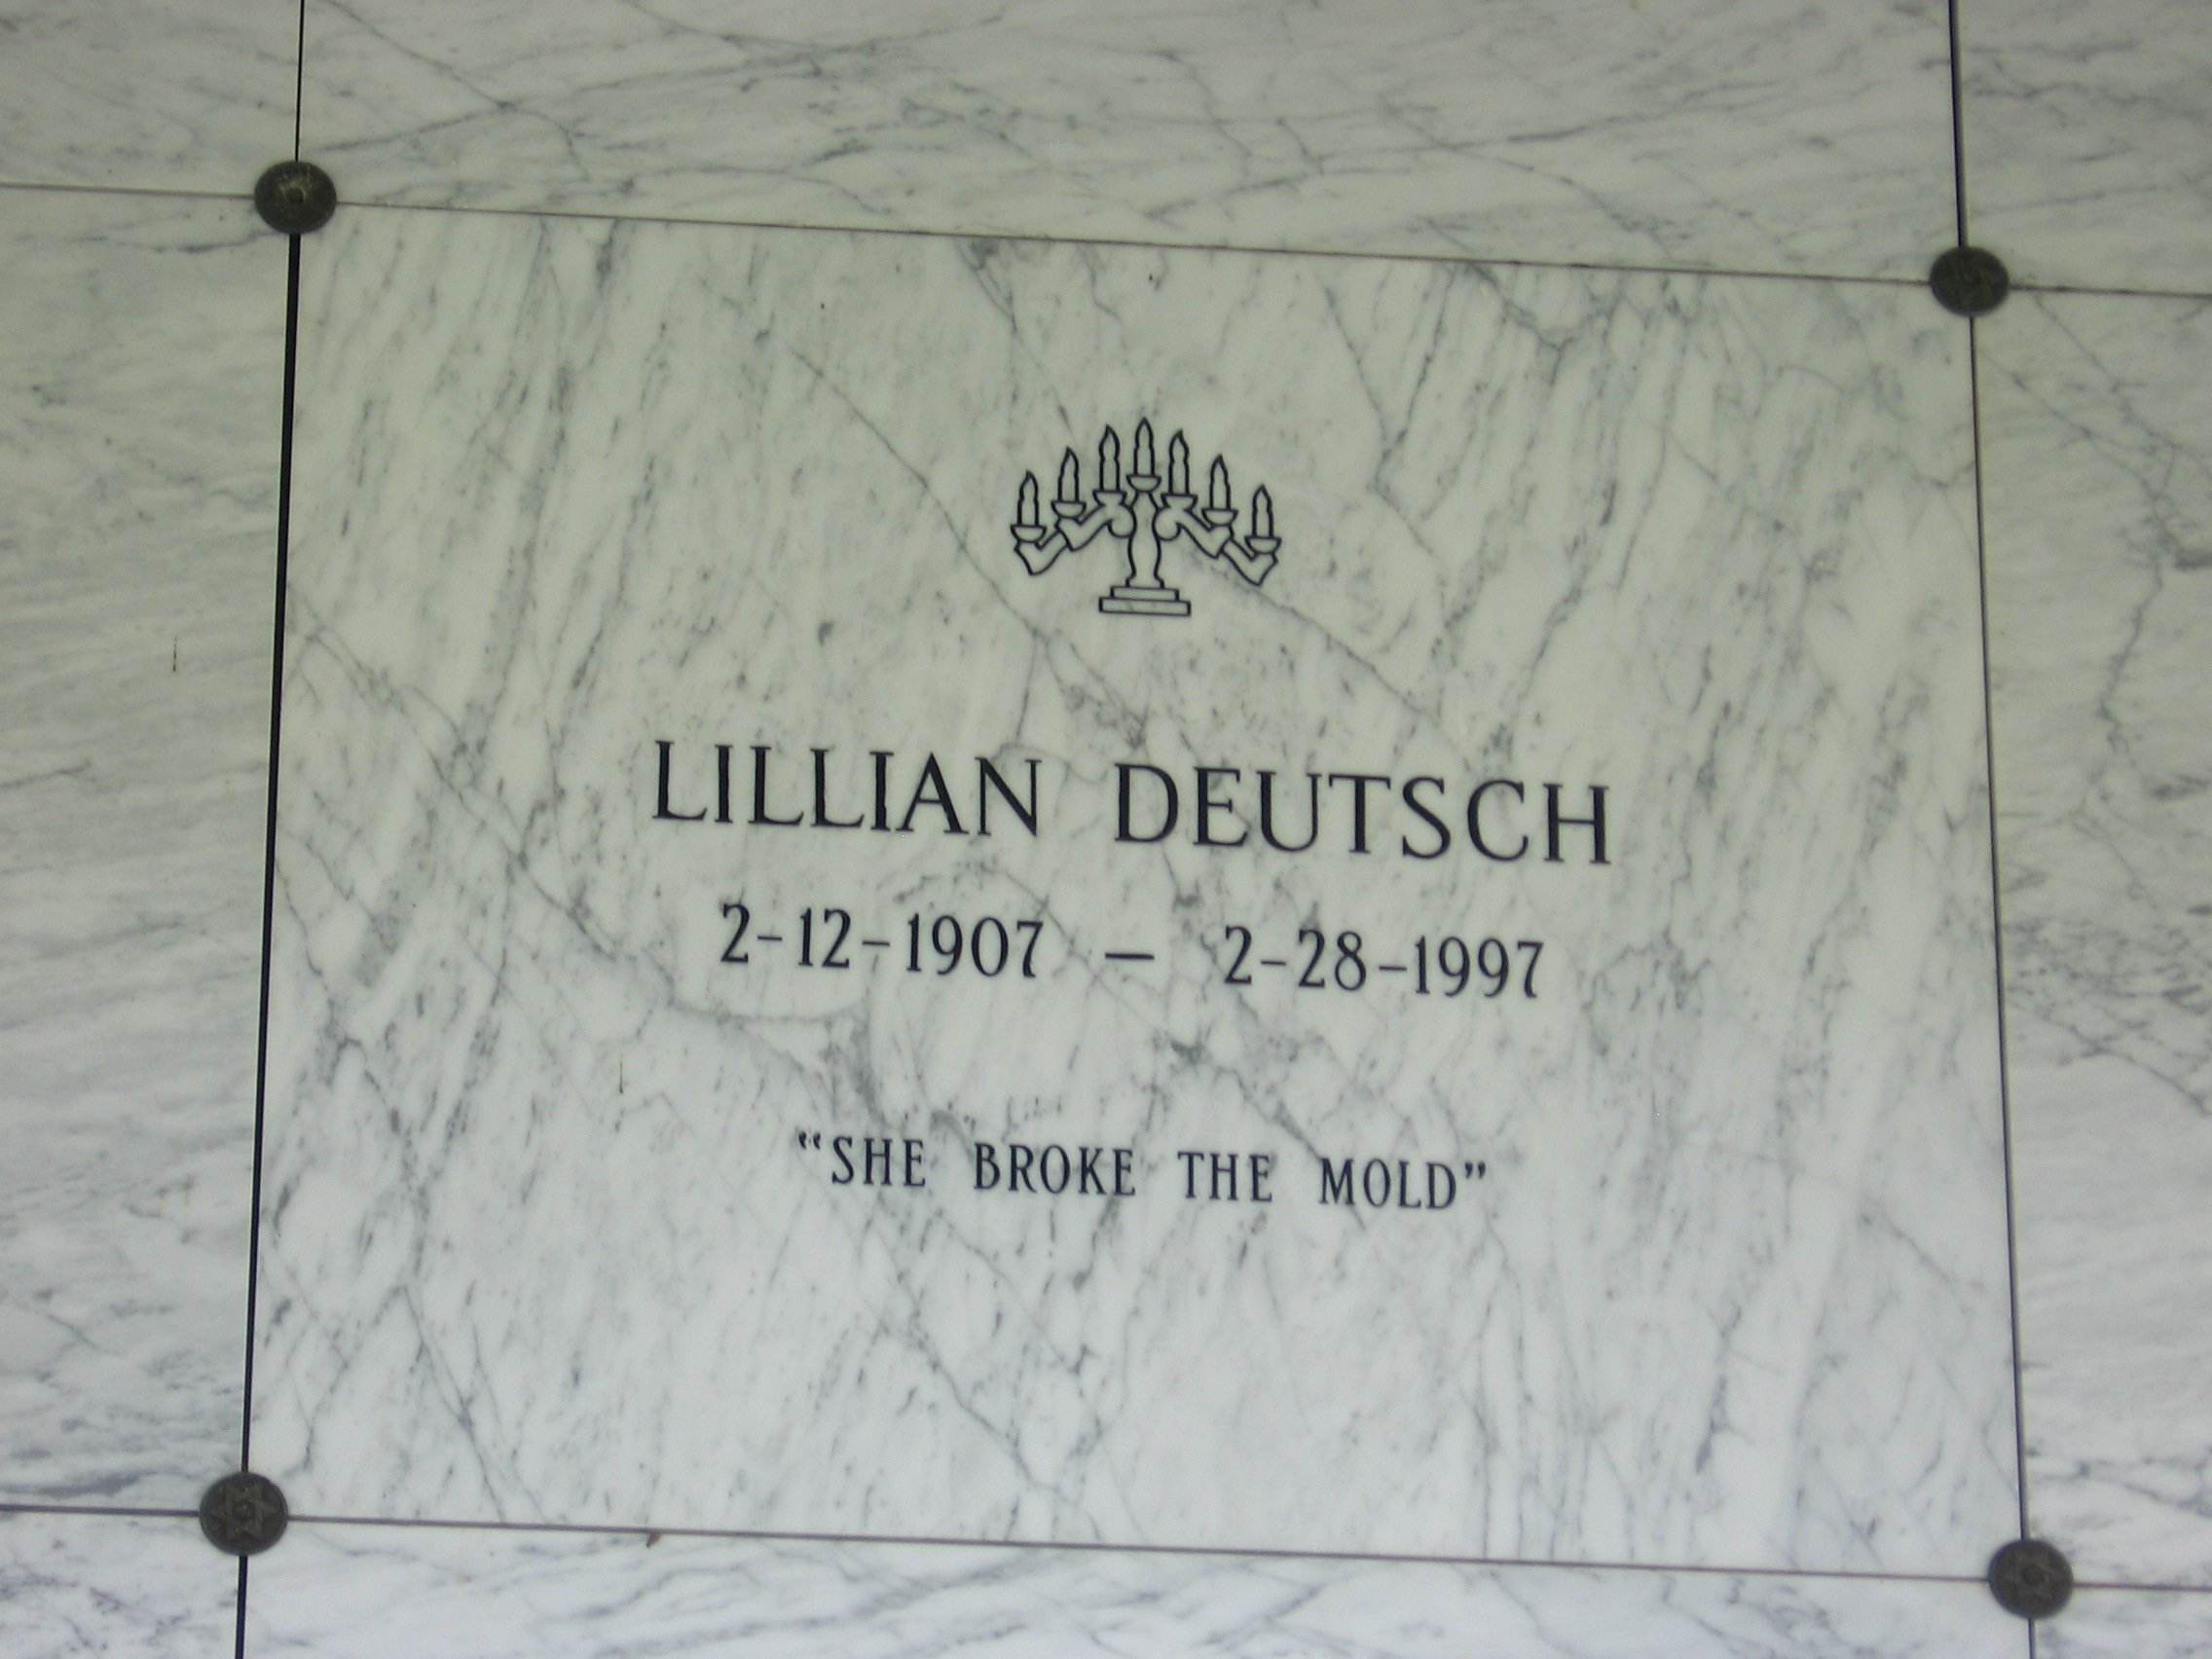 Lillian Deutsch